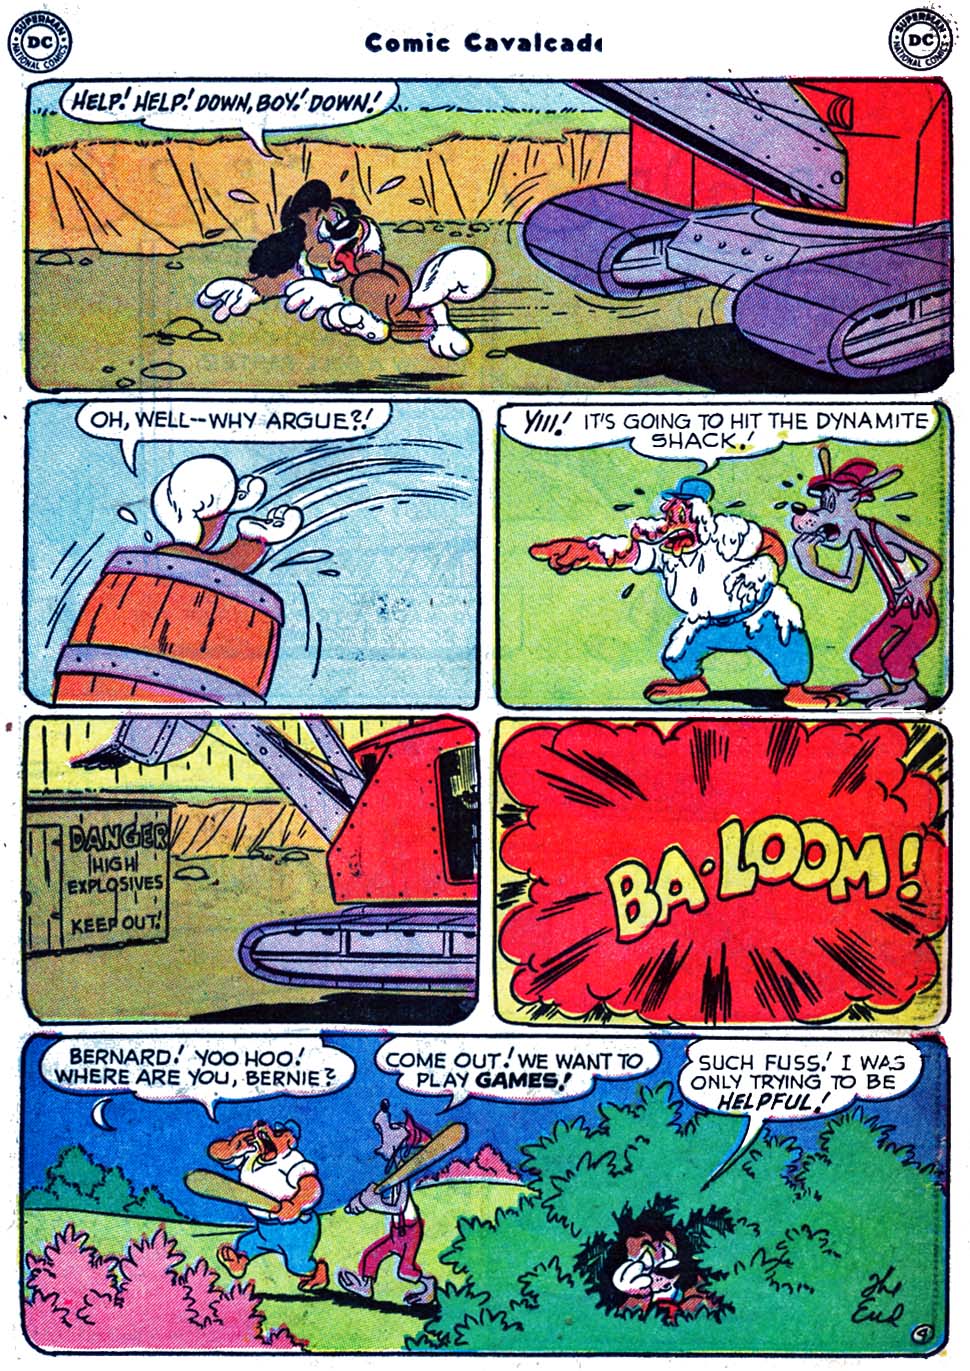 Comic Cavalcade issue 53 - Page 33